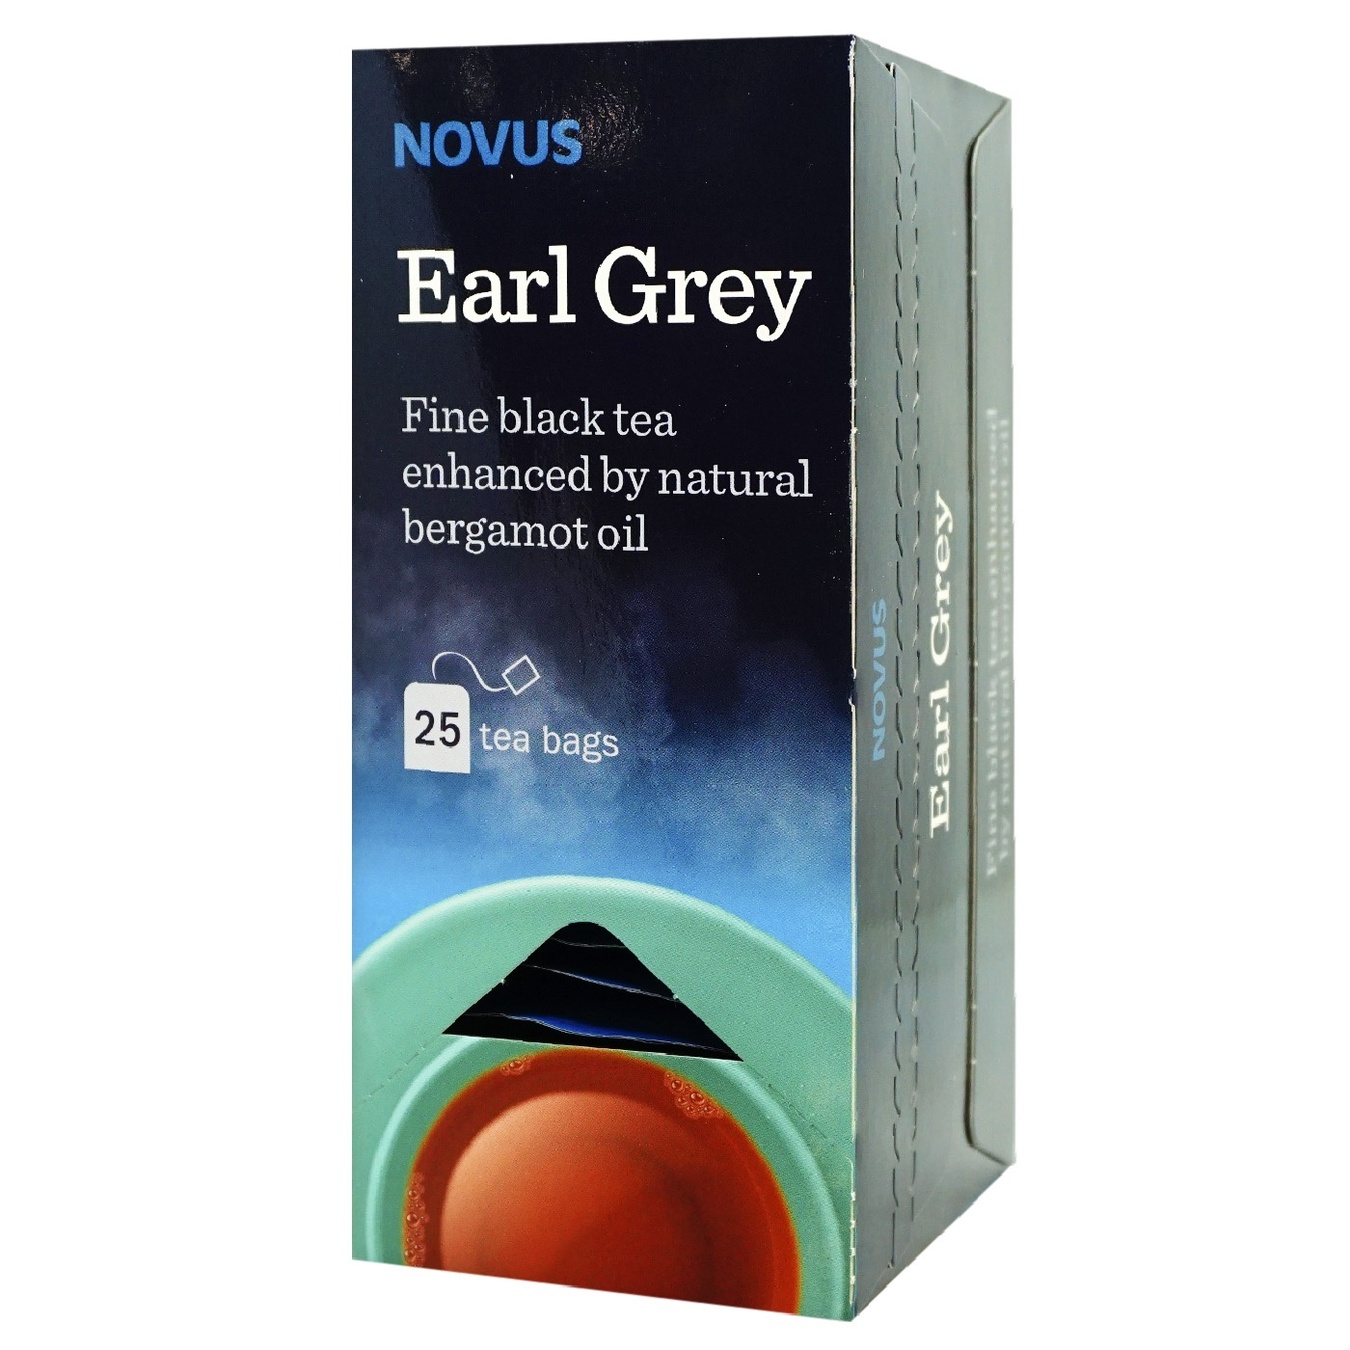 NOVUS Earl Grey with Bergamot Oil Pekoe Black Tea 25pcs 1,5g